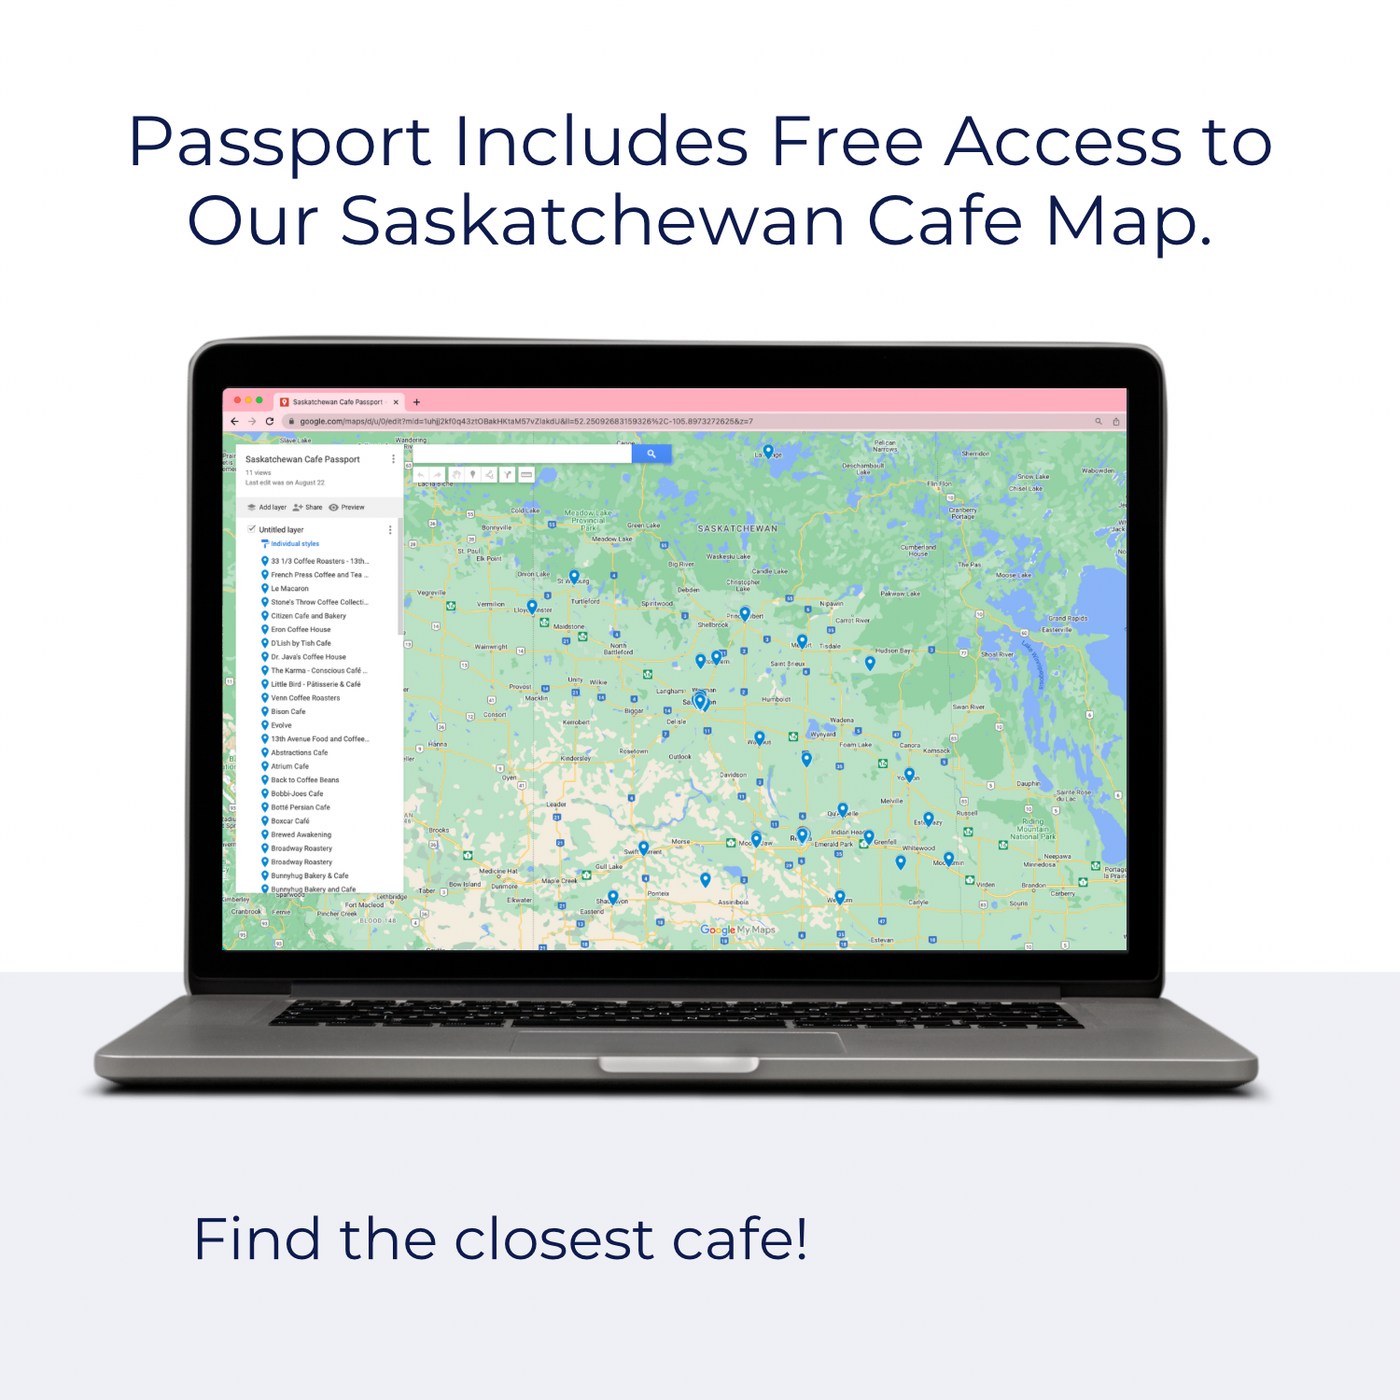 Saskatchewan Cafe Passport Map